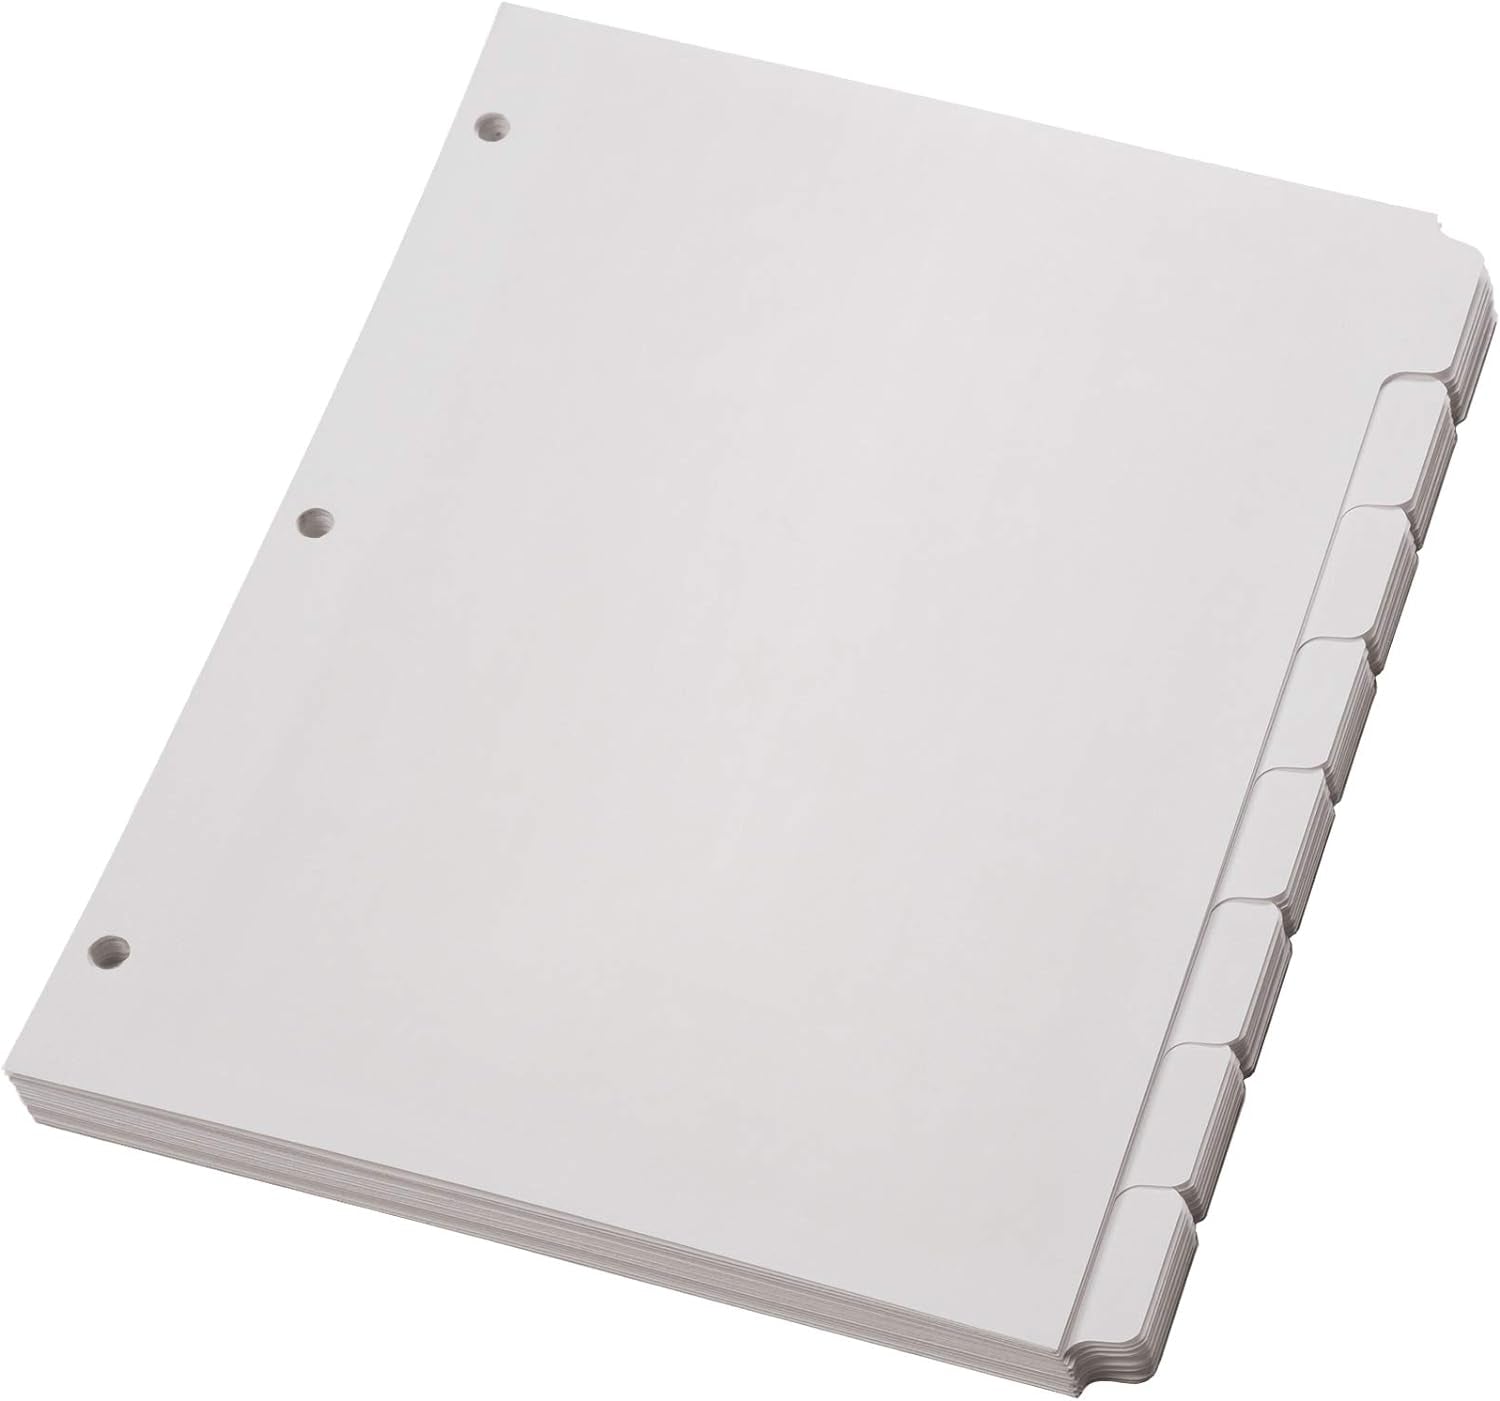 Blank Write on Binder Dividers, 1/8 Cut Tabs, 3 Hole Punch Dividers in 8 Tab Sets, 80 Dividers, 10 Sets, White (89982)